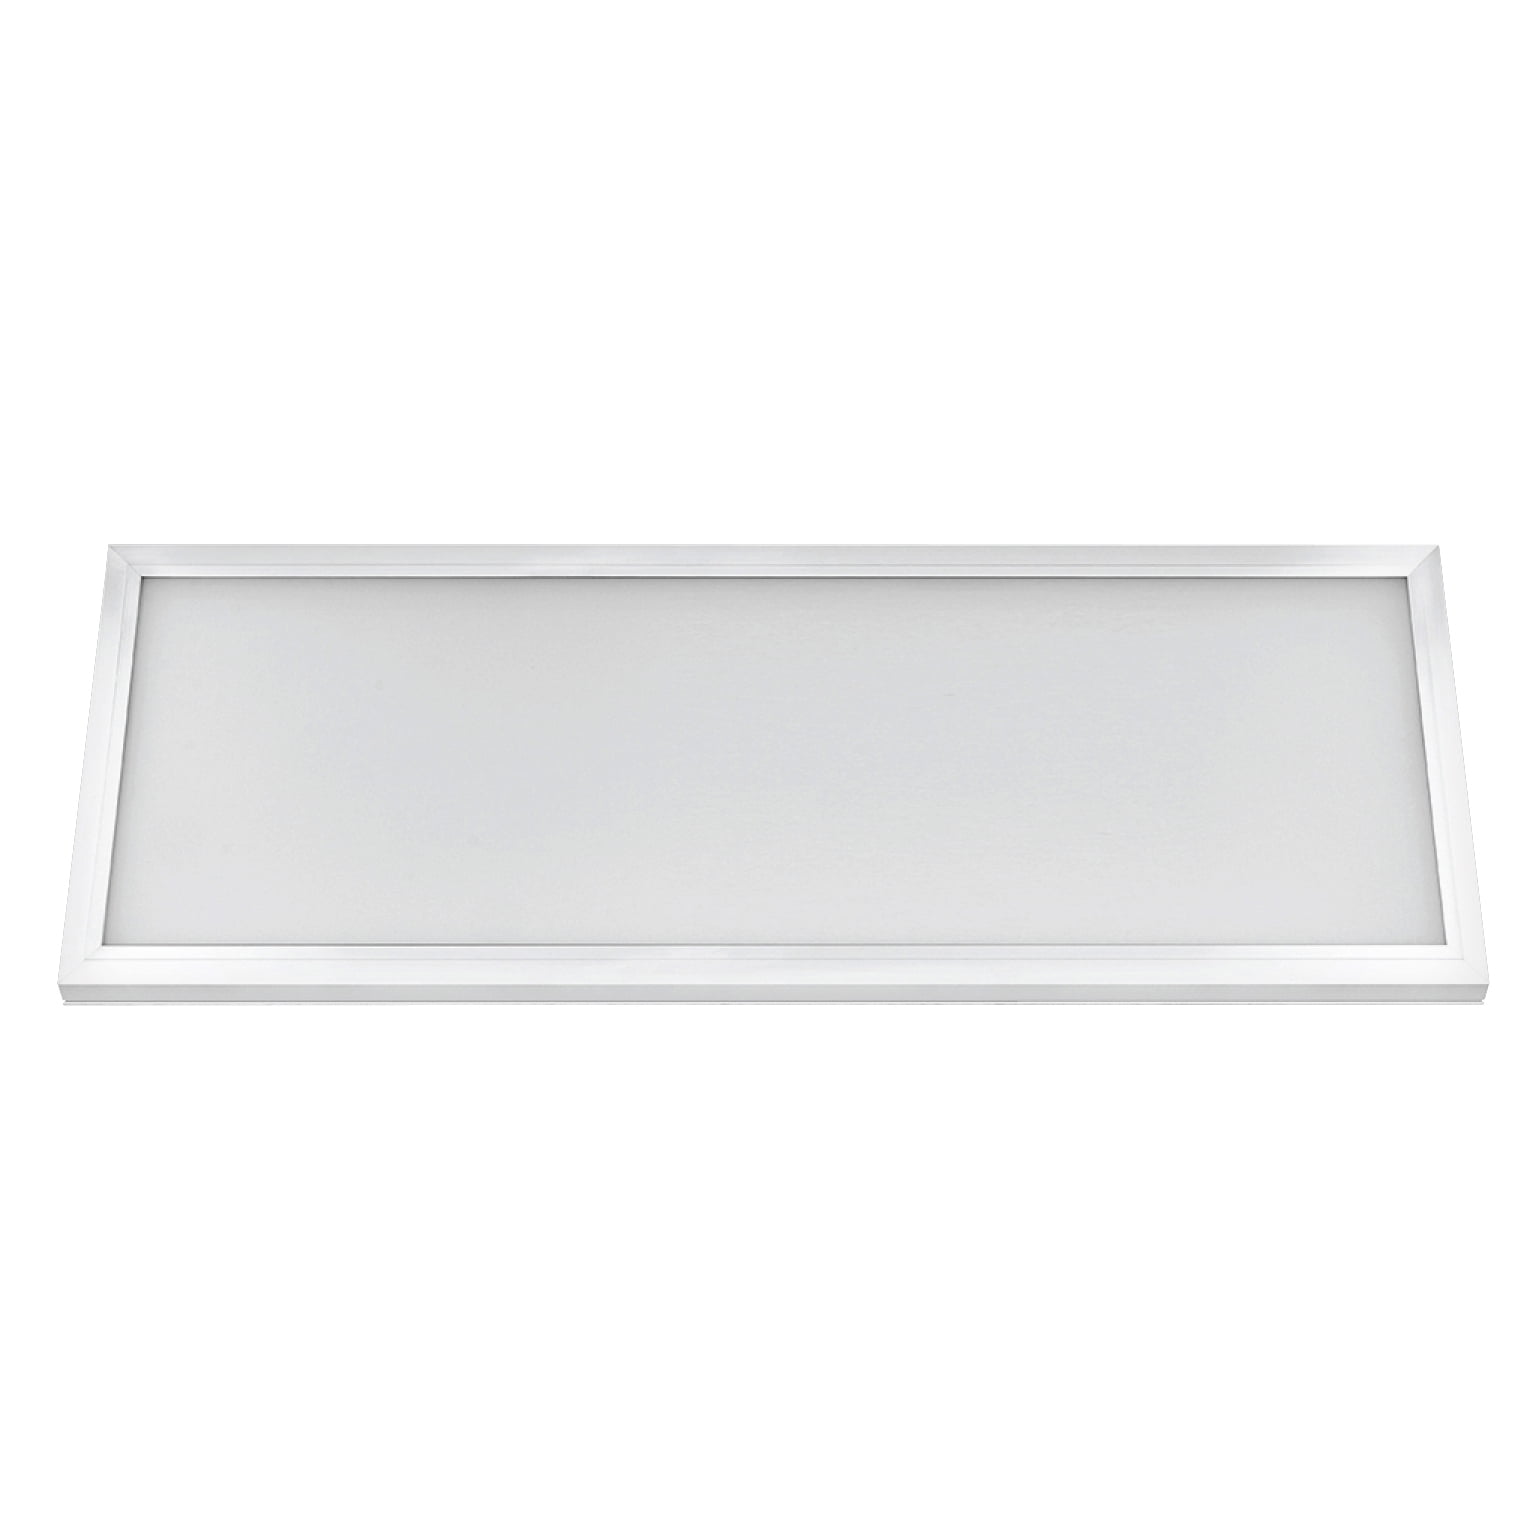 3862216 48 X 12 In. White Led Flat Panel Light Fixture